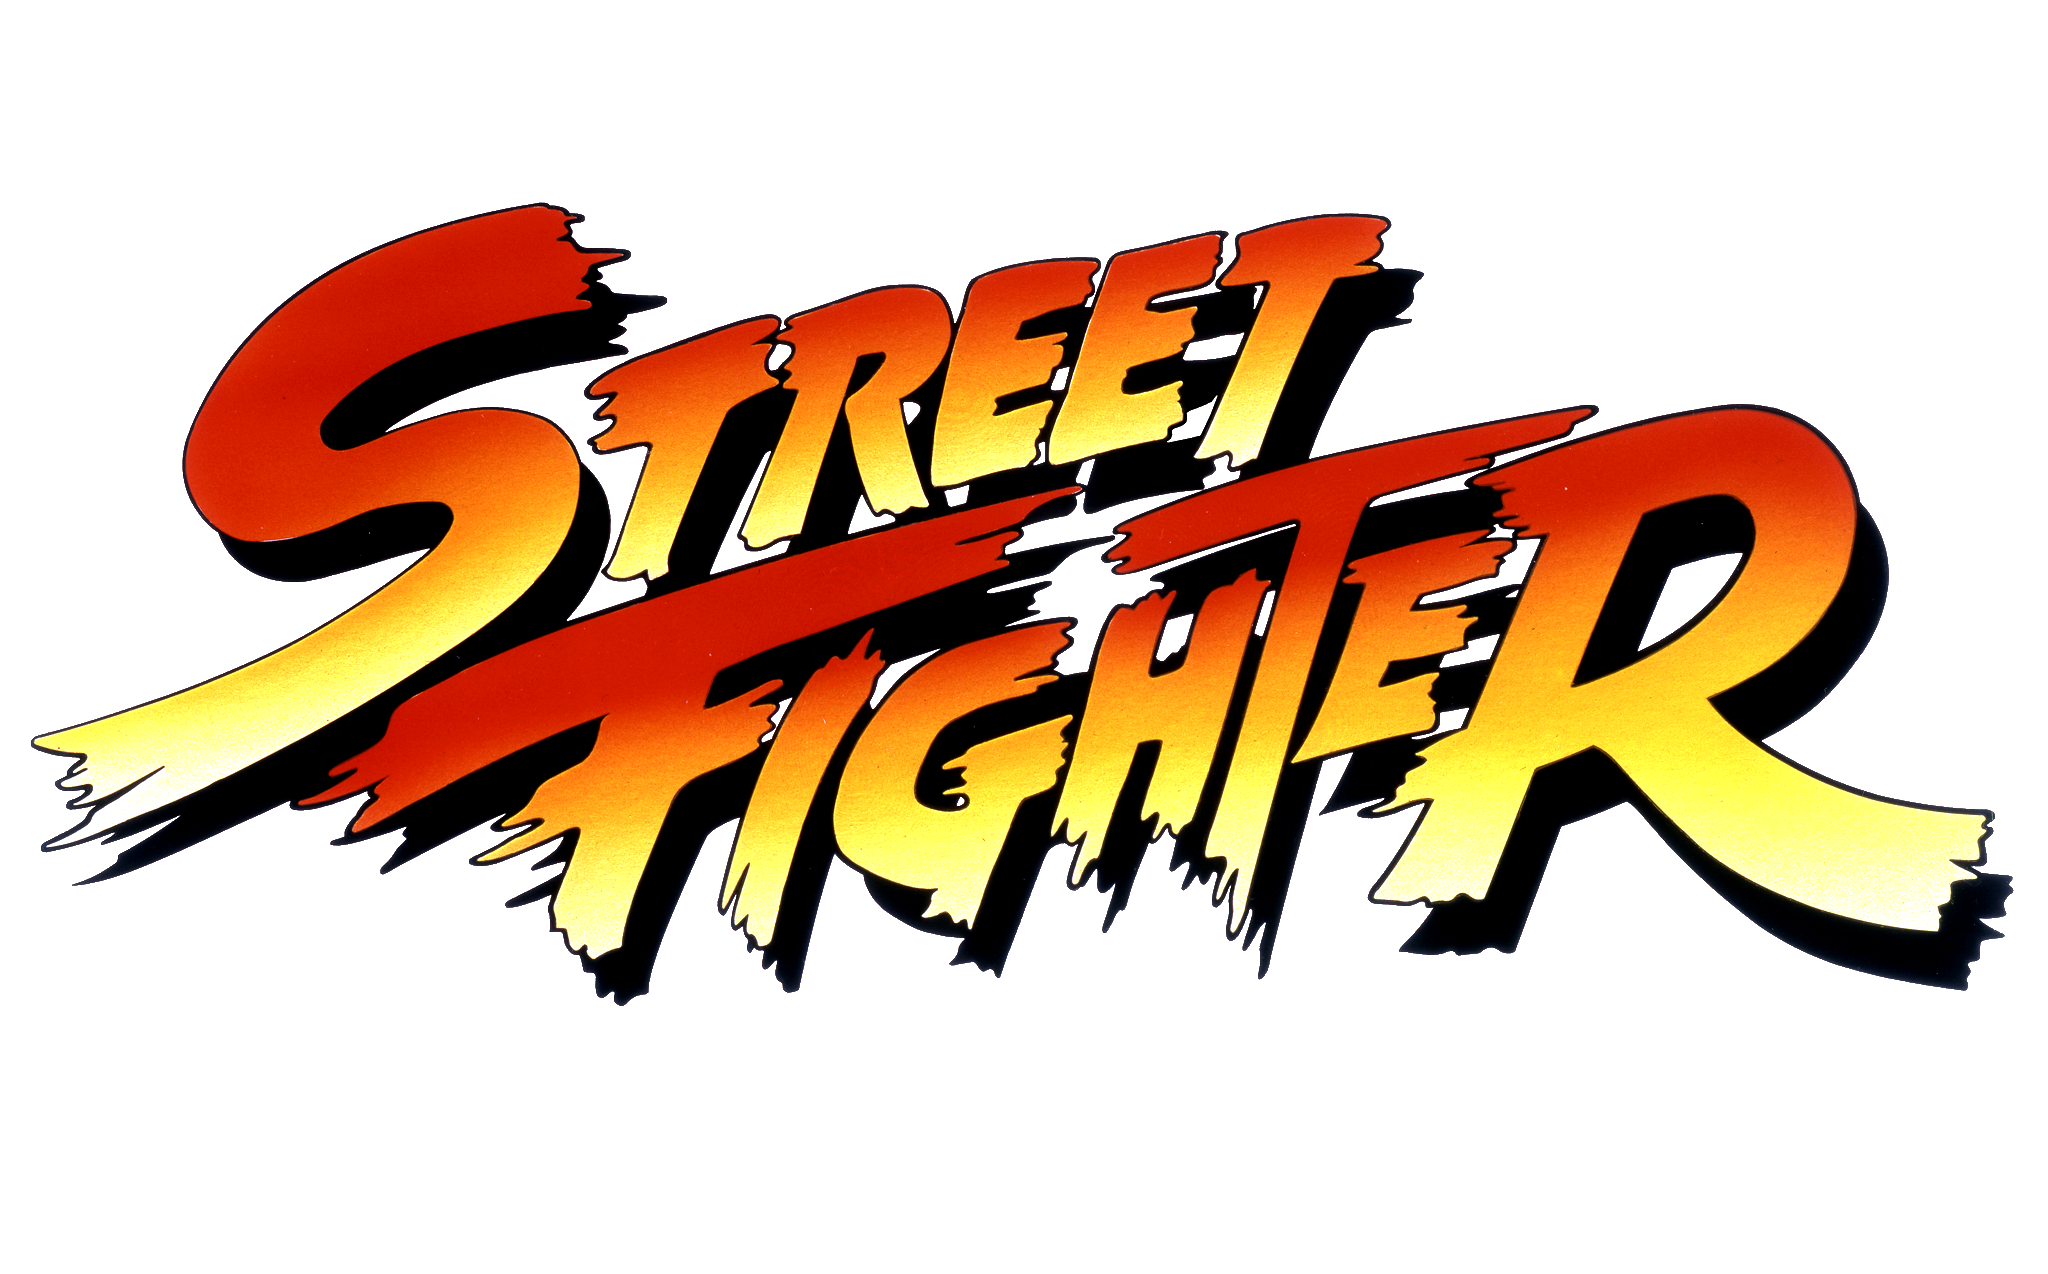 new street fighter 6 logo